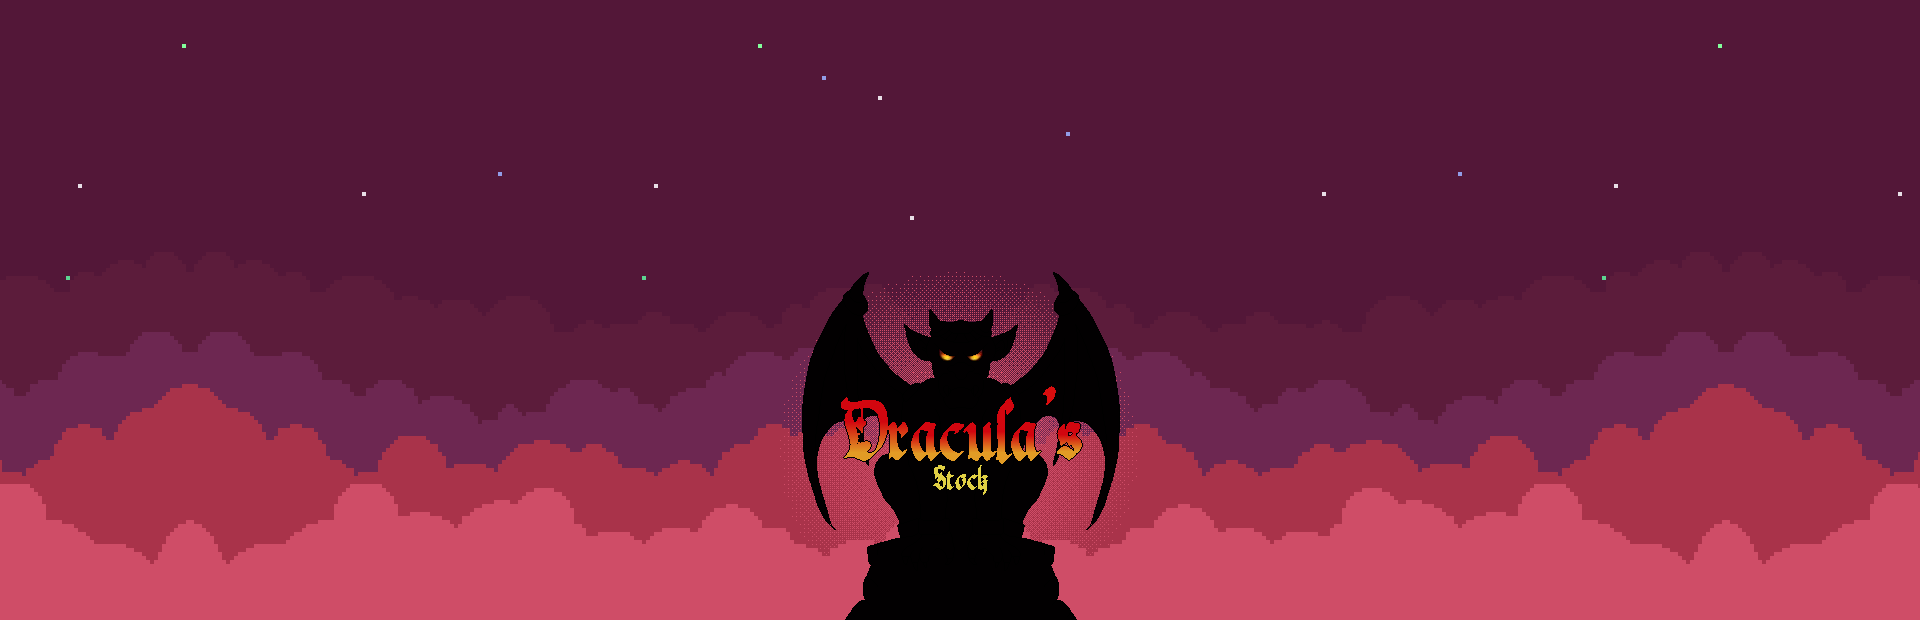 Dracula's Stock